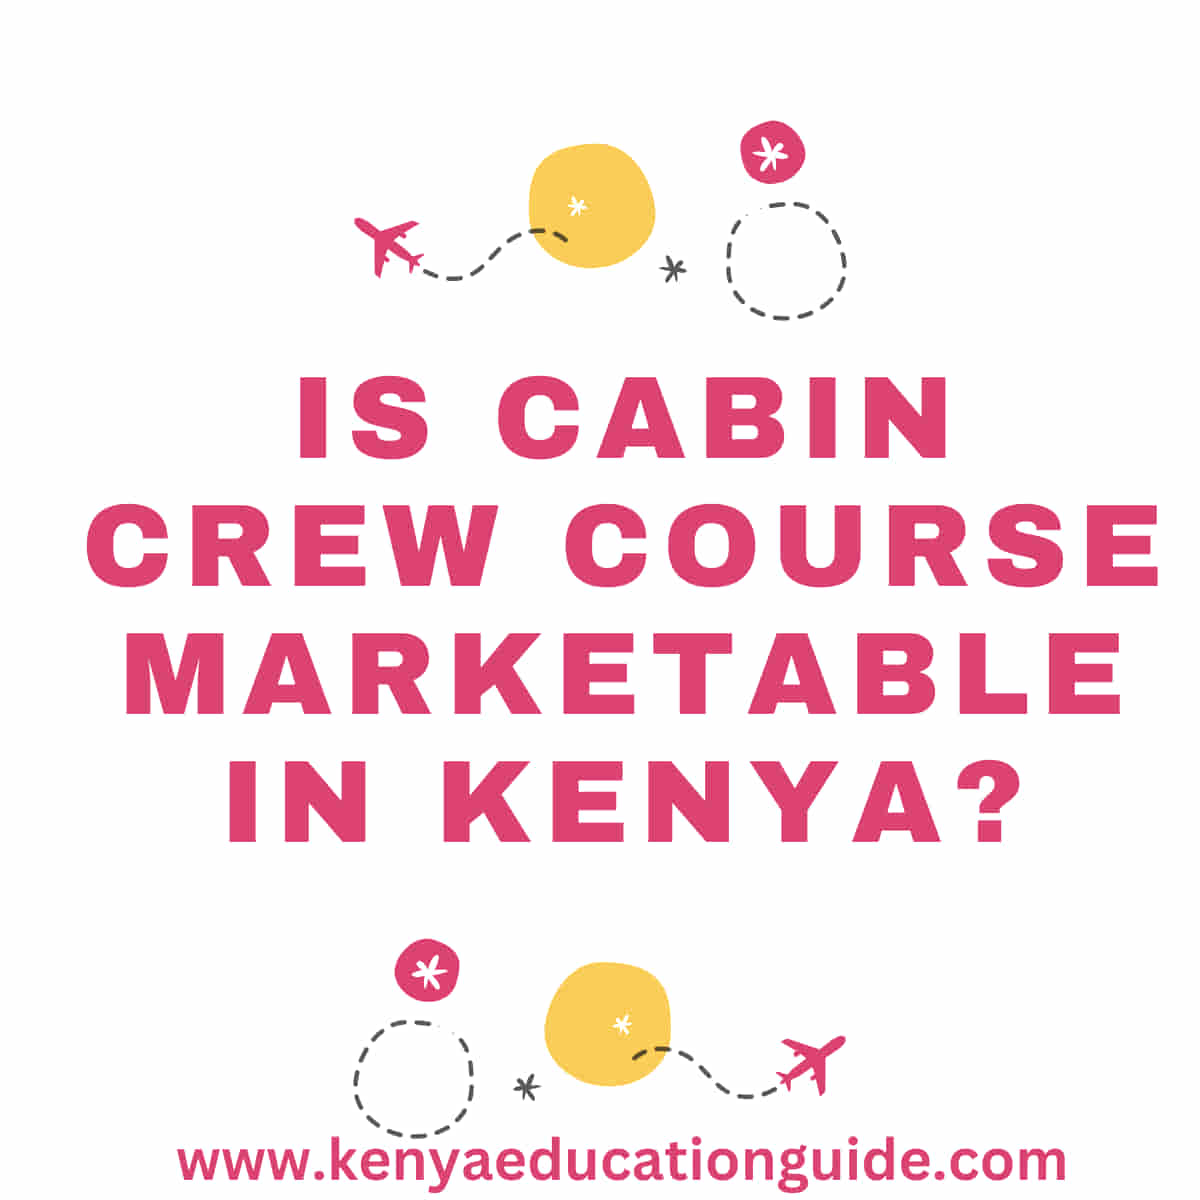 Is cabin crew course marketable in Kenya